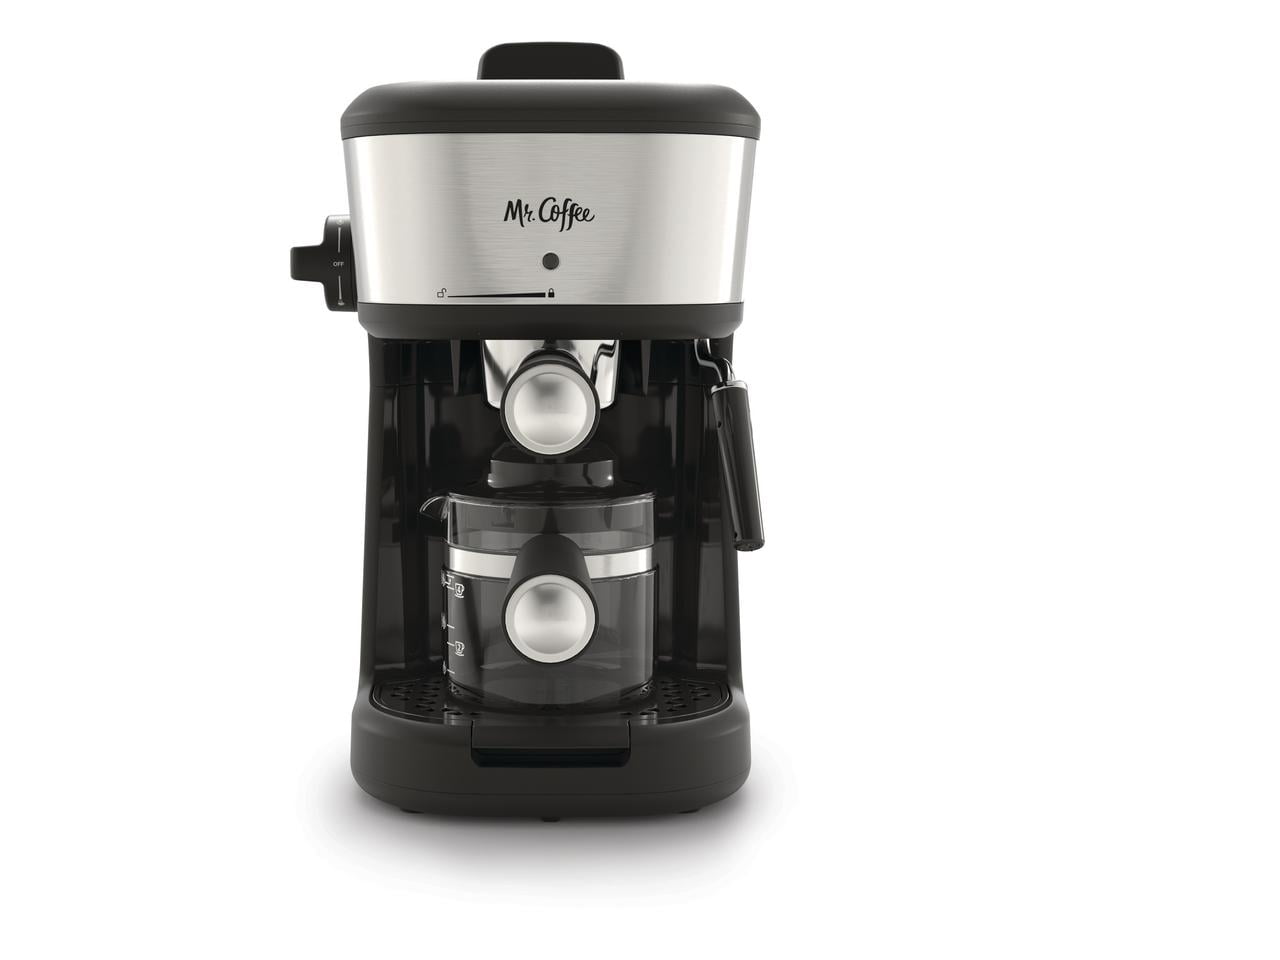 Mr. Coffee 4-Shot Steam Espresso, Cappuccino, and Latte Maker with Glass Carafe